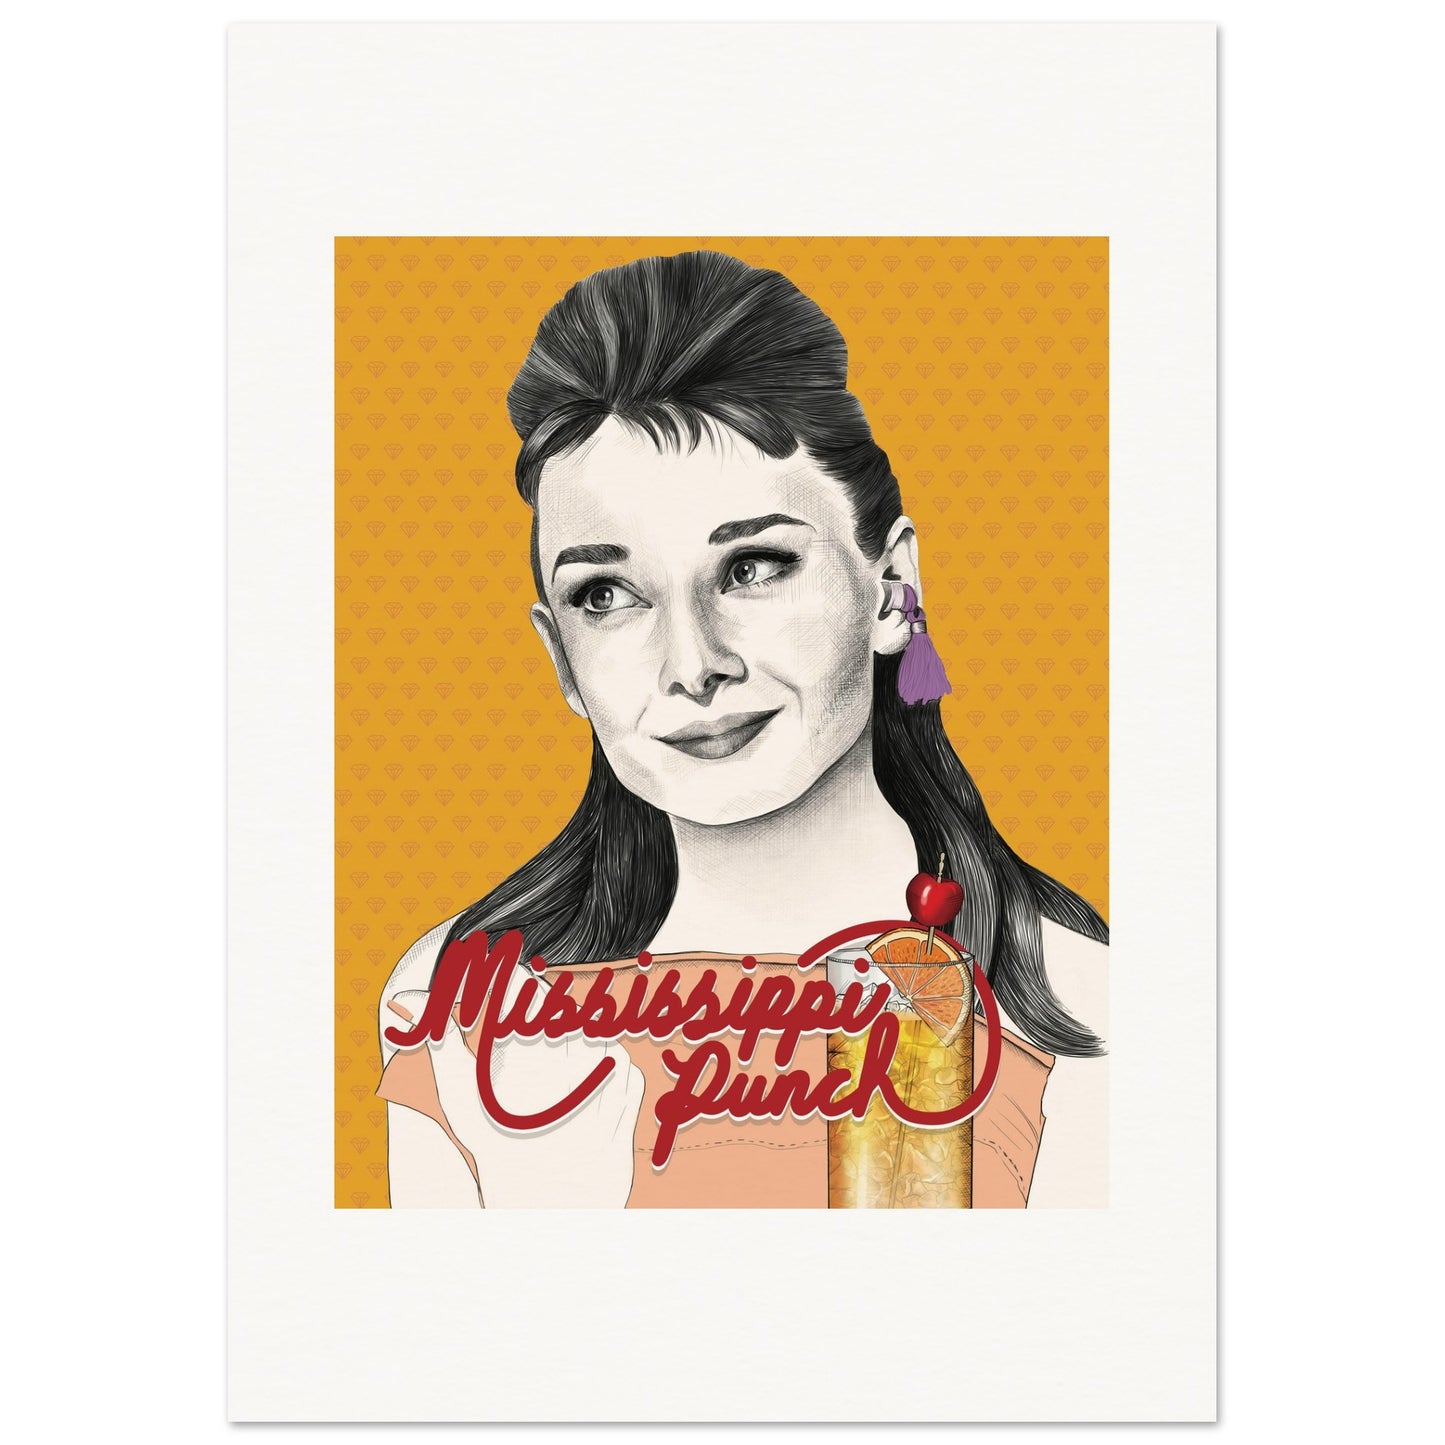 Mississippi Punch | Audrey Hepburn | Breakfast at Tiffany's - Poster Print